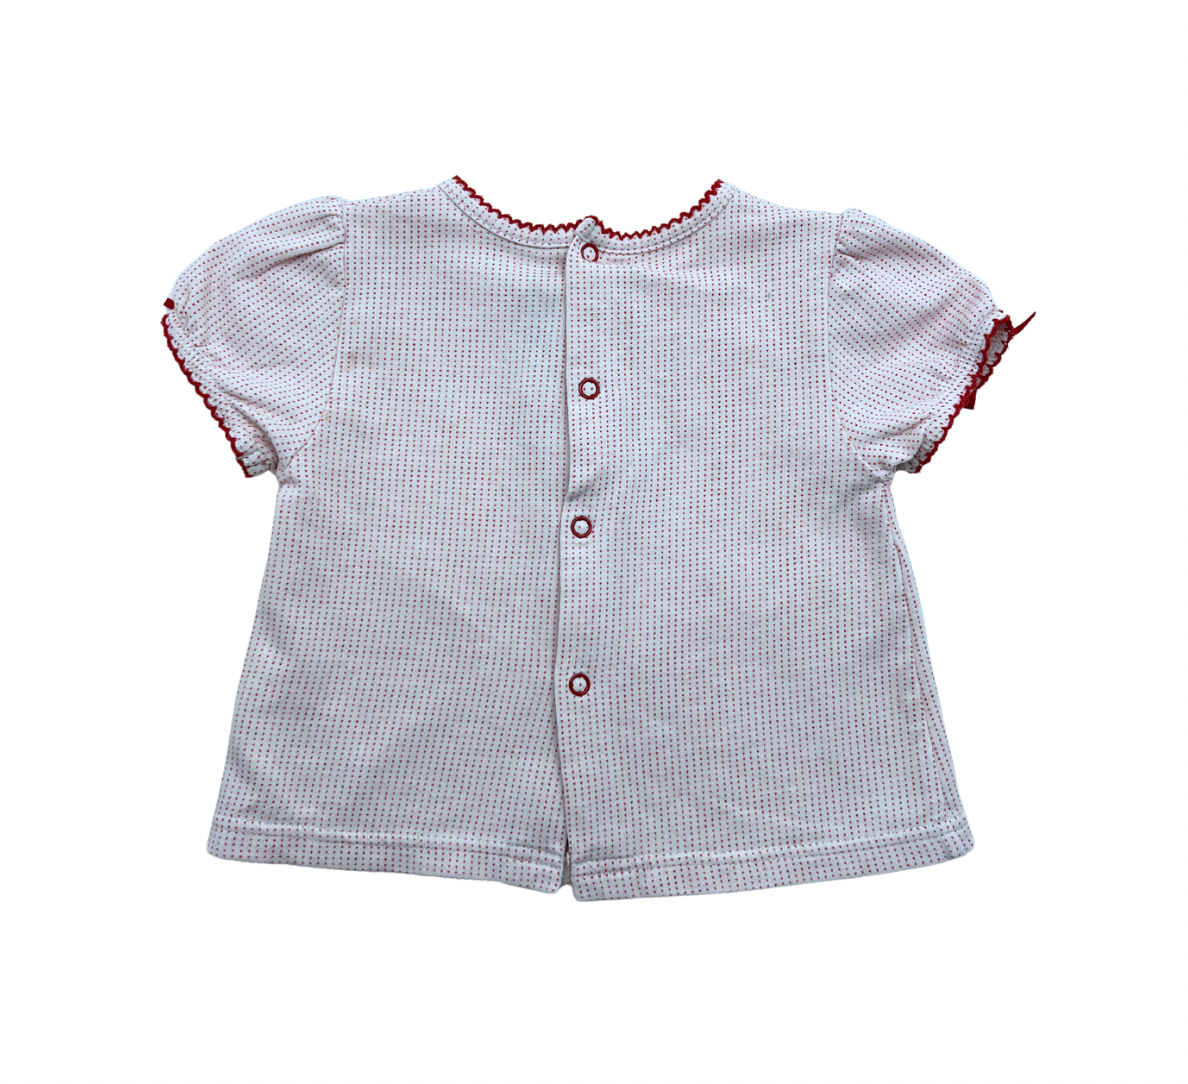 BABY DIOR - T-shirt fraises - 6 mois